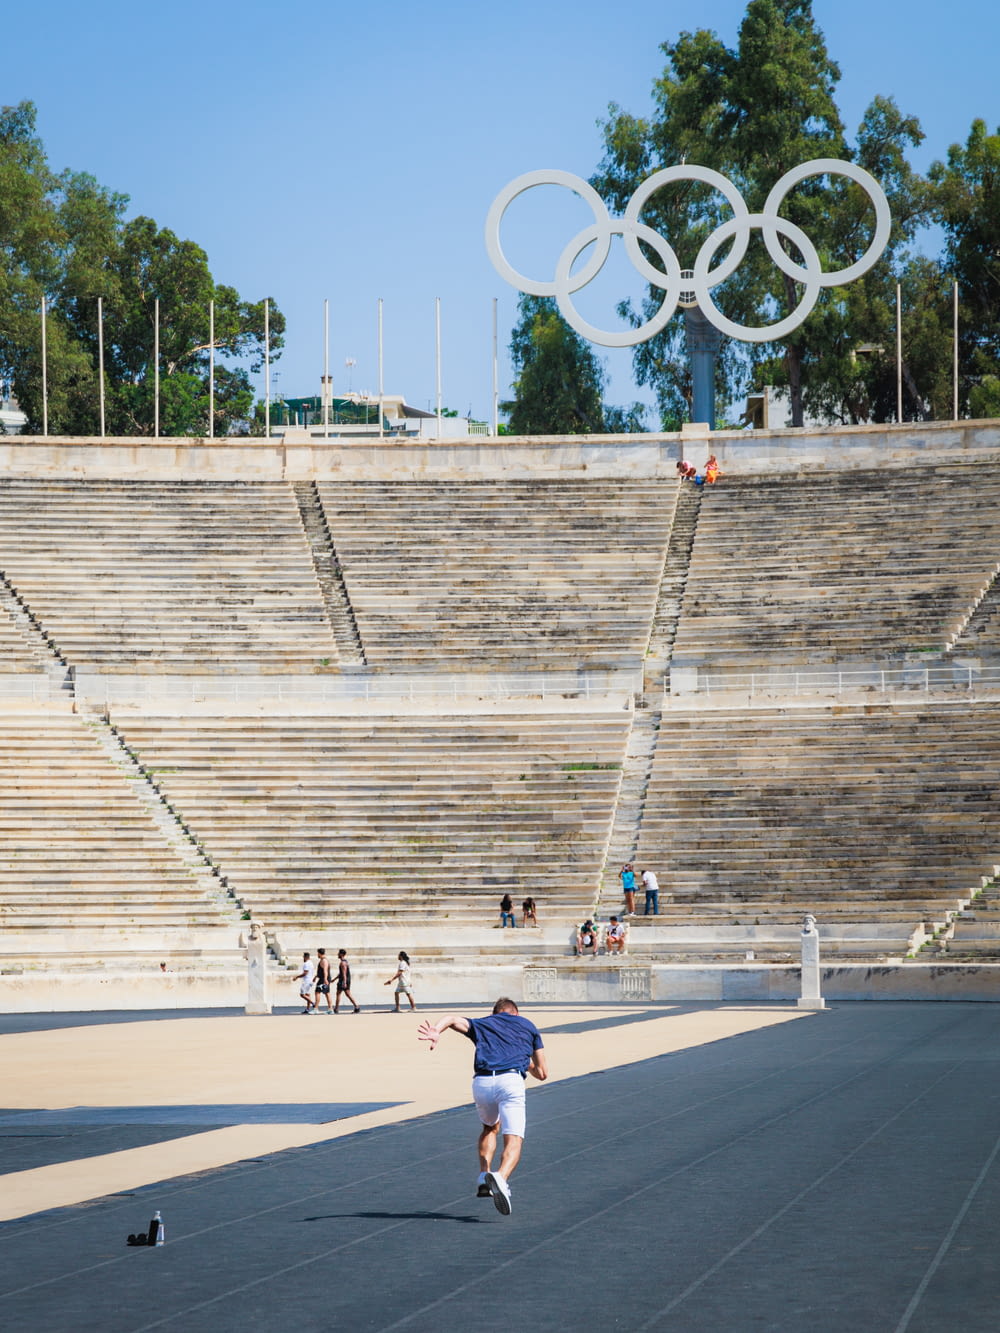 Un uomo sta facendo skateboard davanti a uno stadio